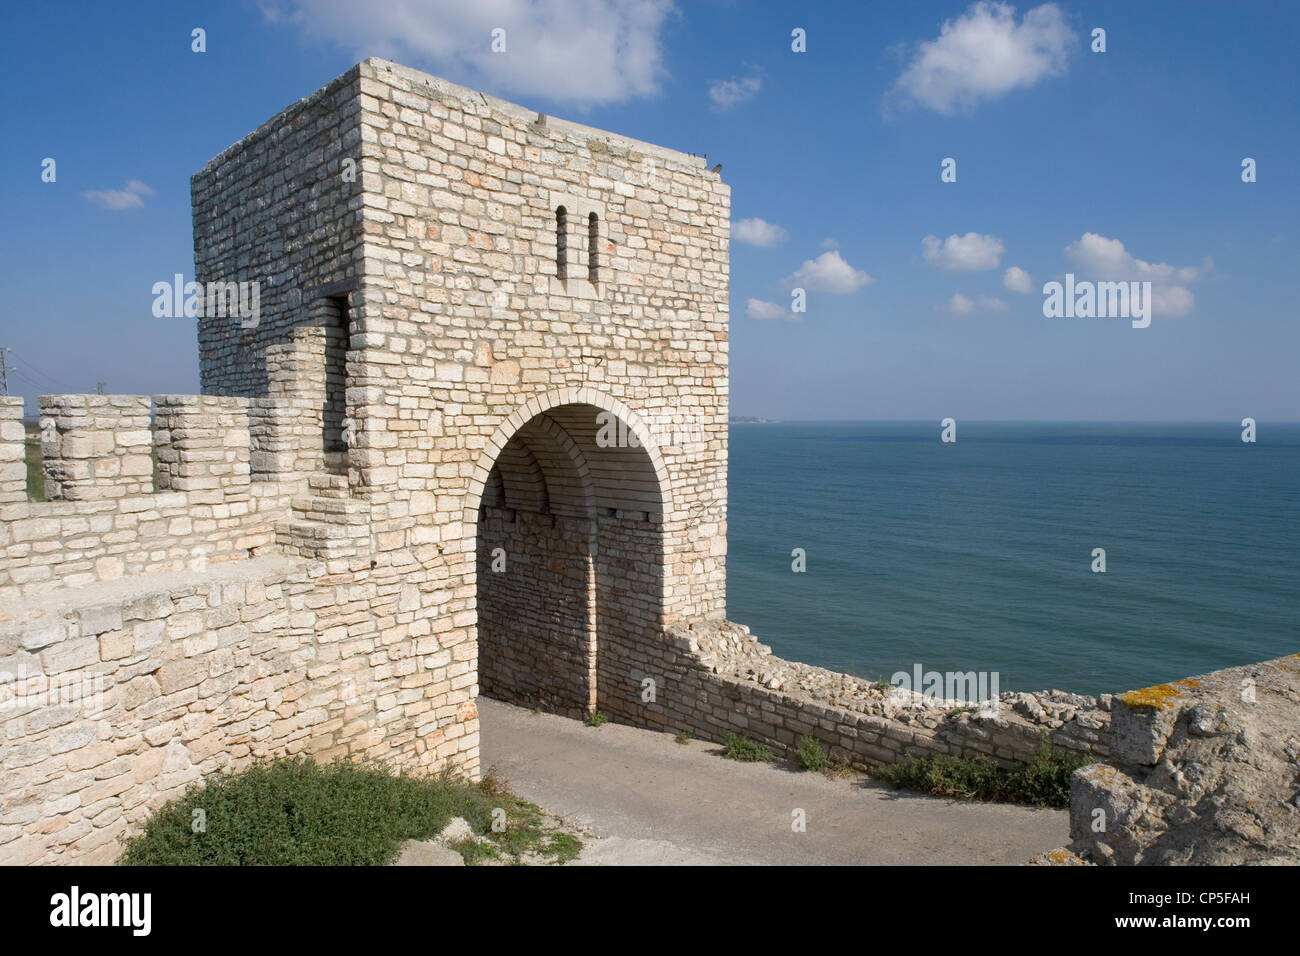 Bulgarien - Schwarzes Meer - Kap Kaliakra (Nein Kaliakra). Befestigte Stockfoto